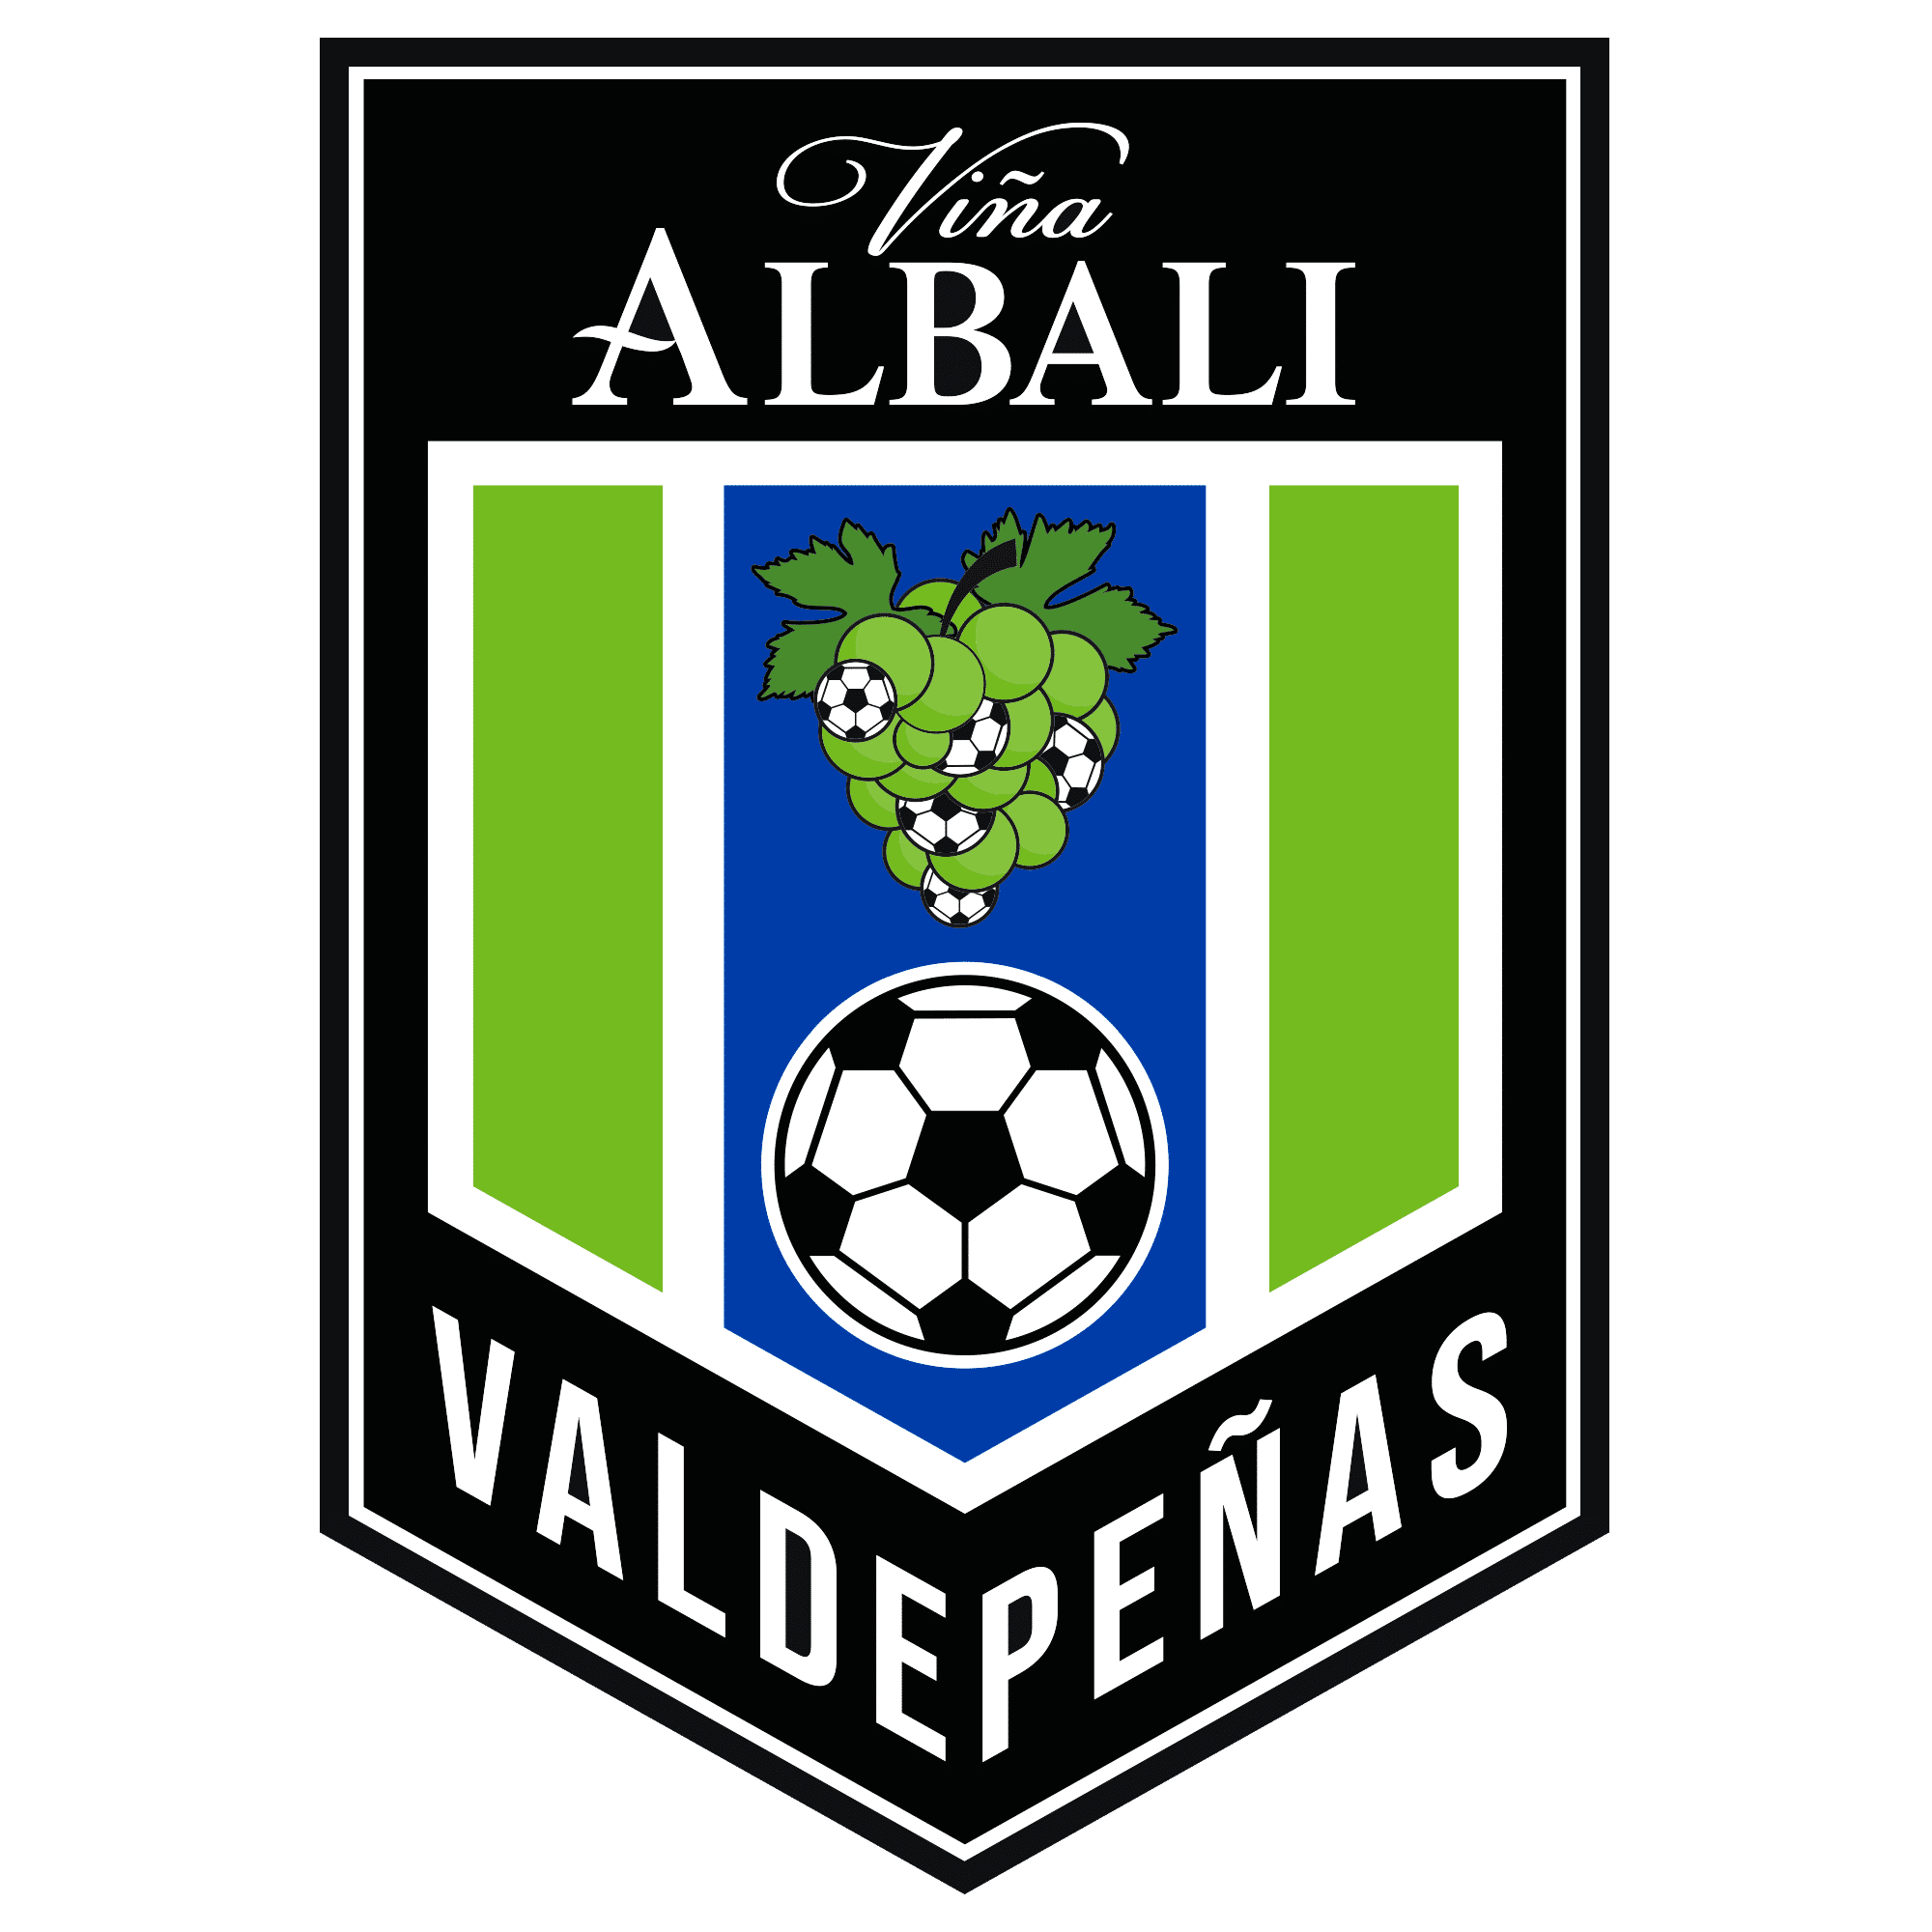 Viña-Albali-Valdepeñas